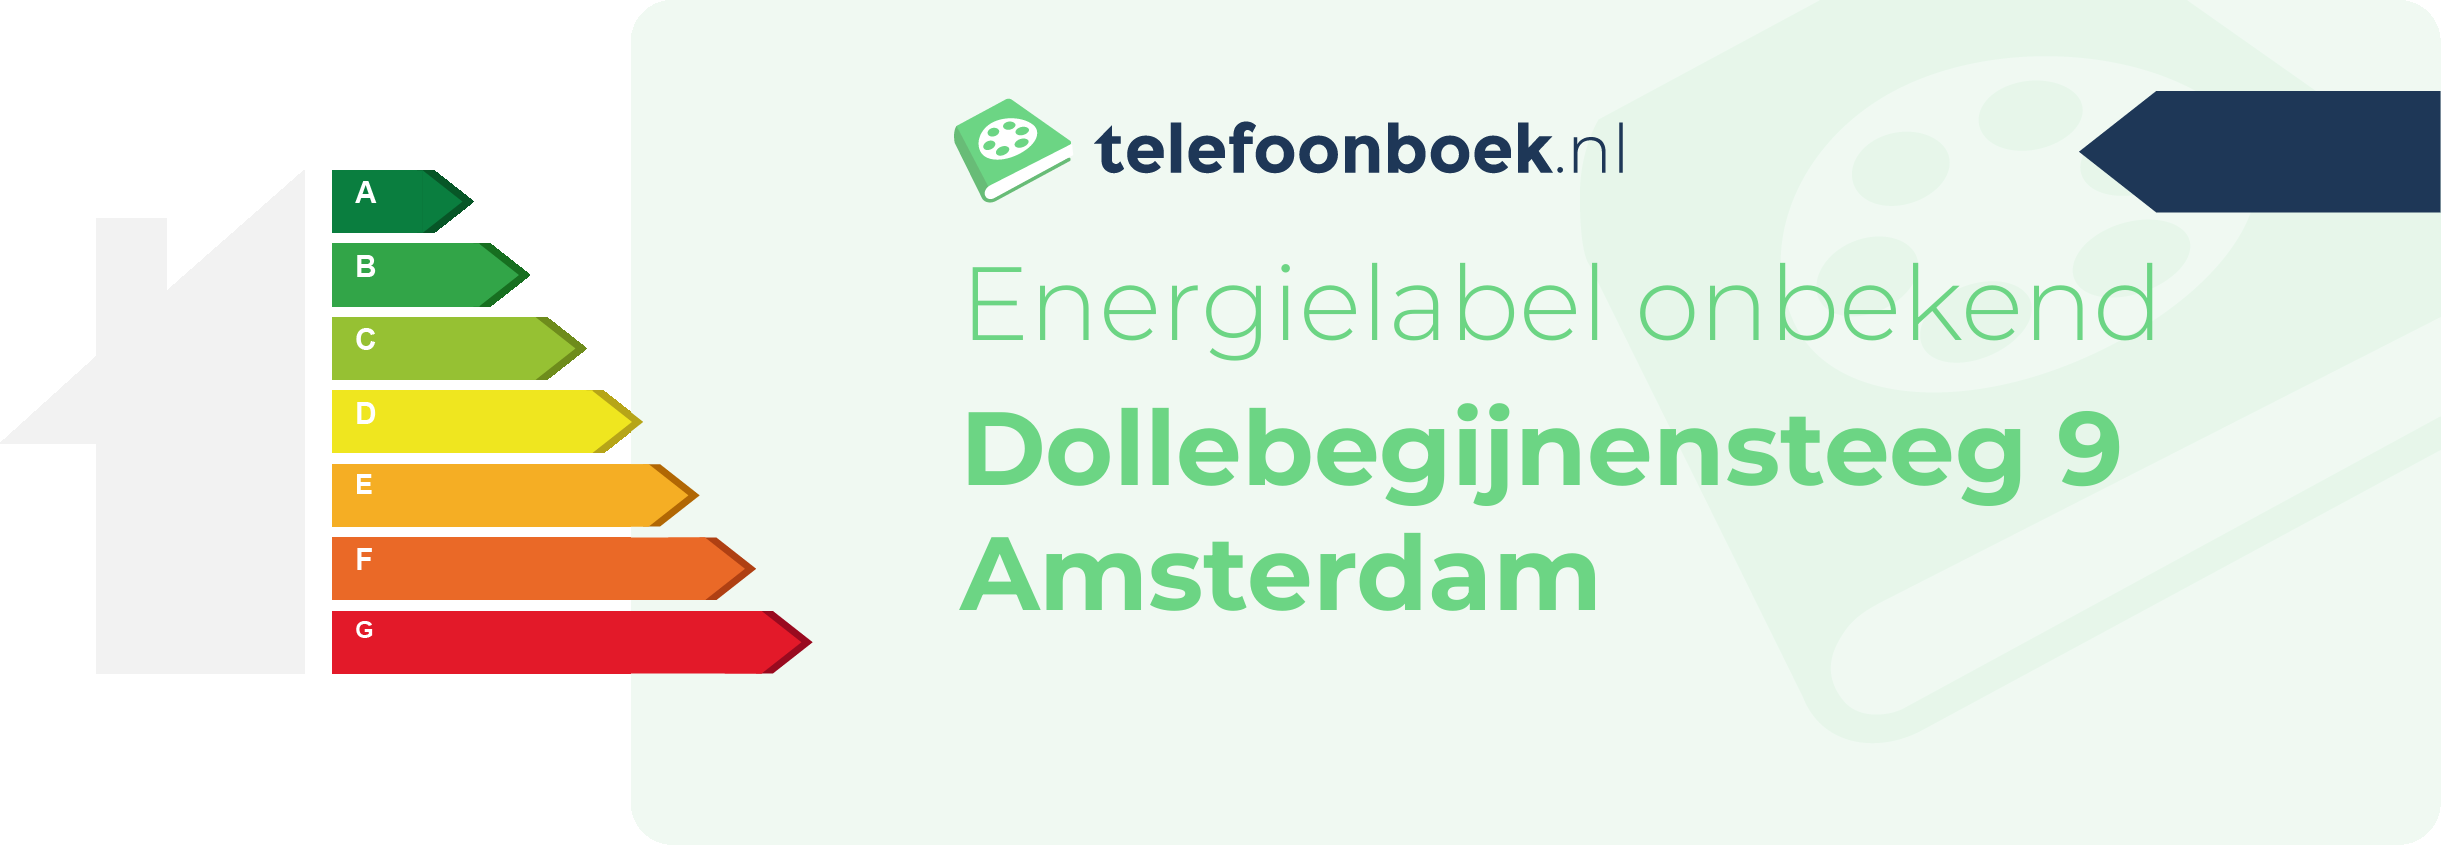 Energielabel Dollebegijnensteeg 9 Amsterdam